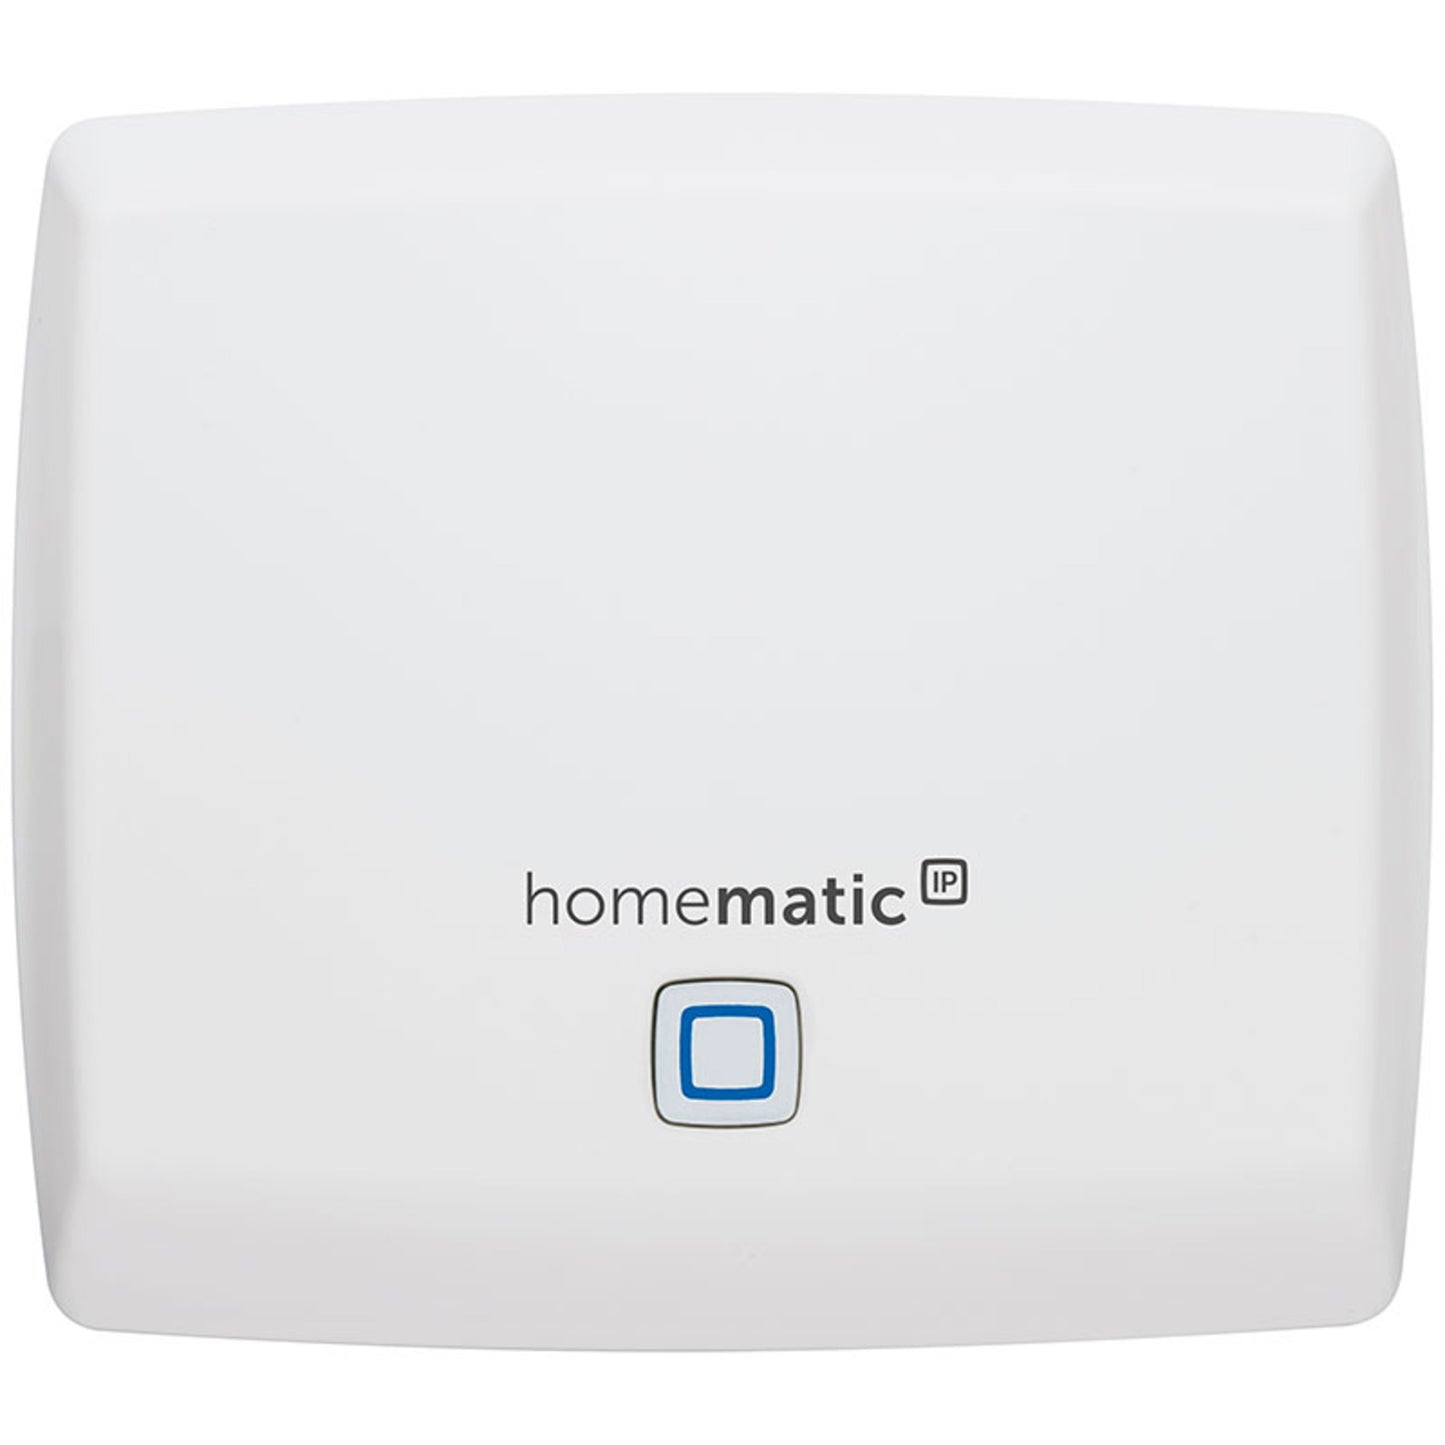 Homematic IP Set Wetter Pro mit Homematic IP Access Point und Funk-Wettersensor pro